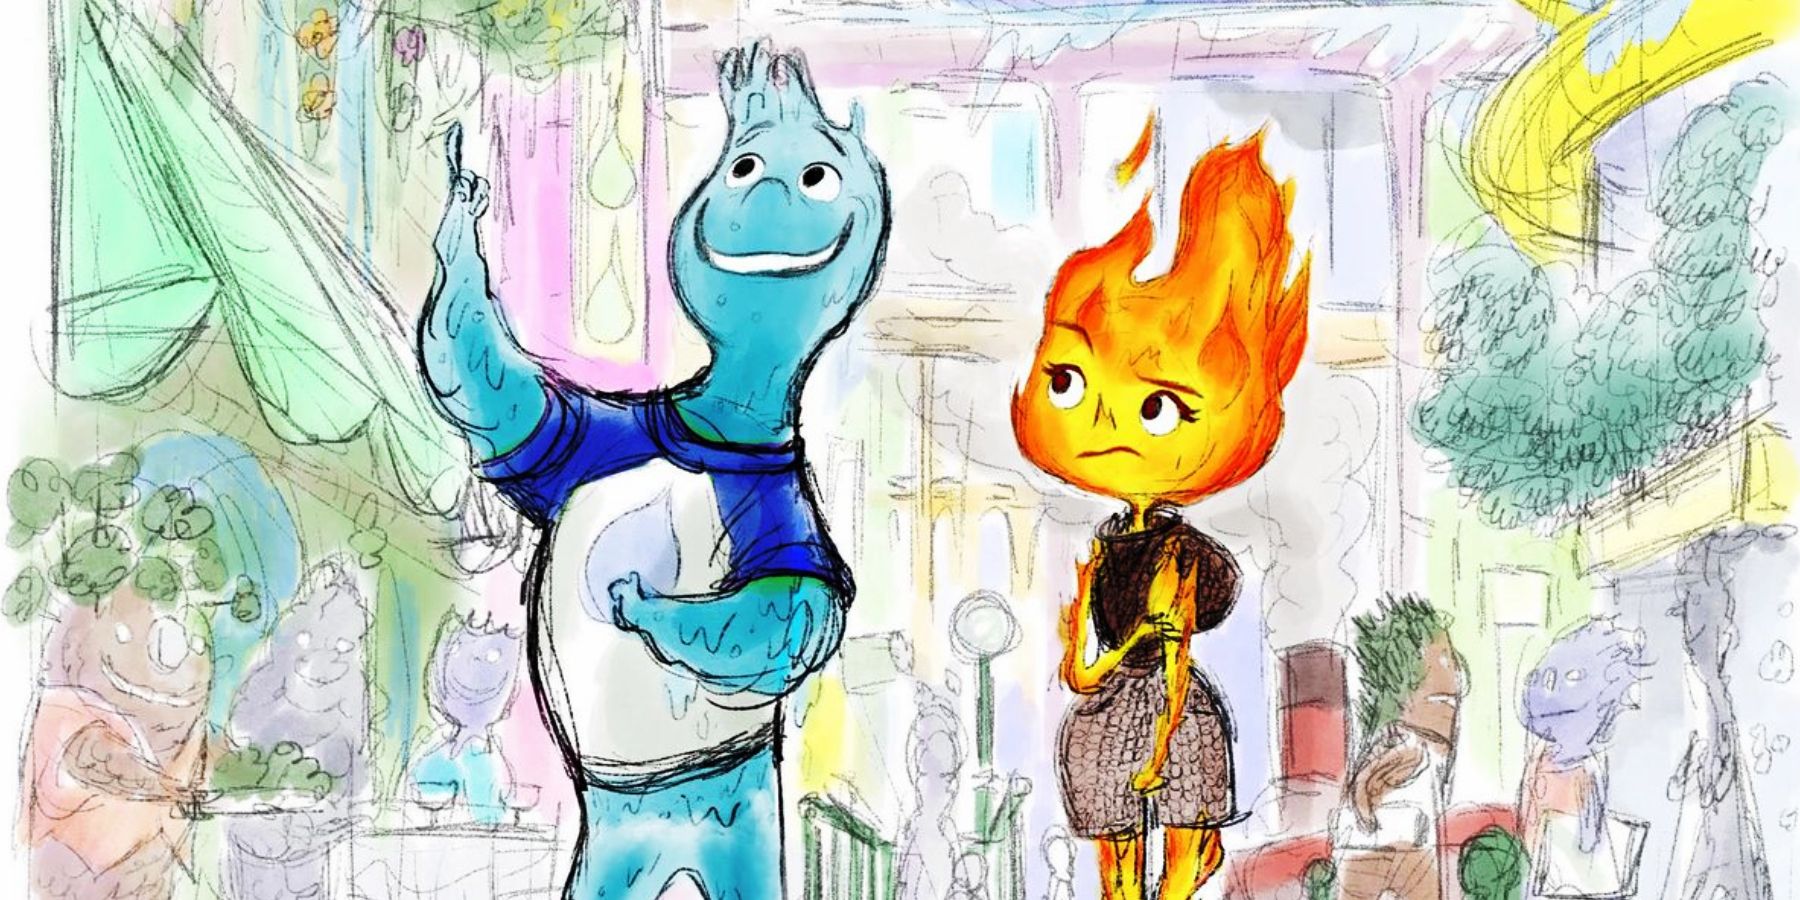 Water and Fire in Disney Pixar's Elemental